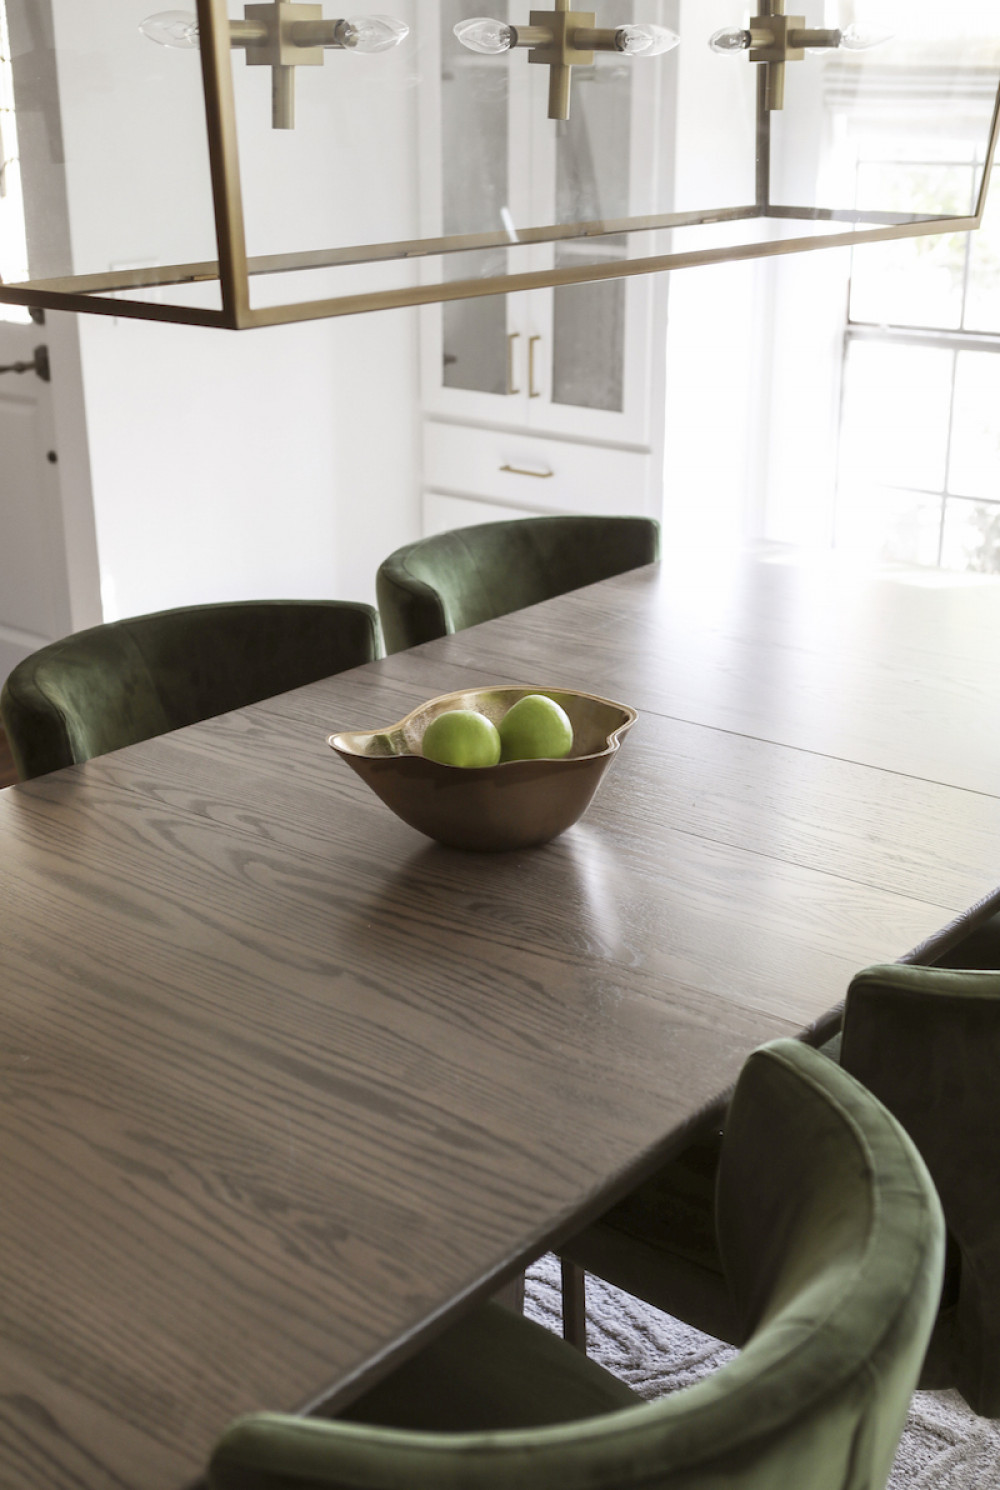 dining-table-bowl-apples-plano-tx-interior-design